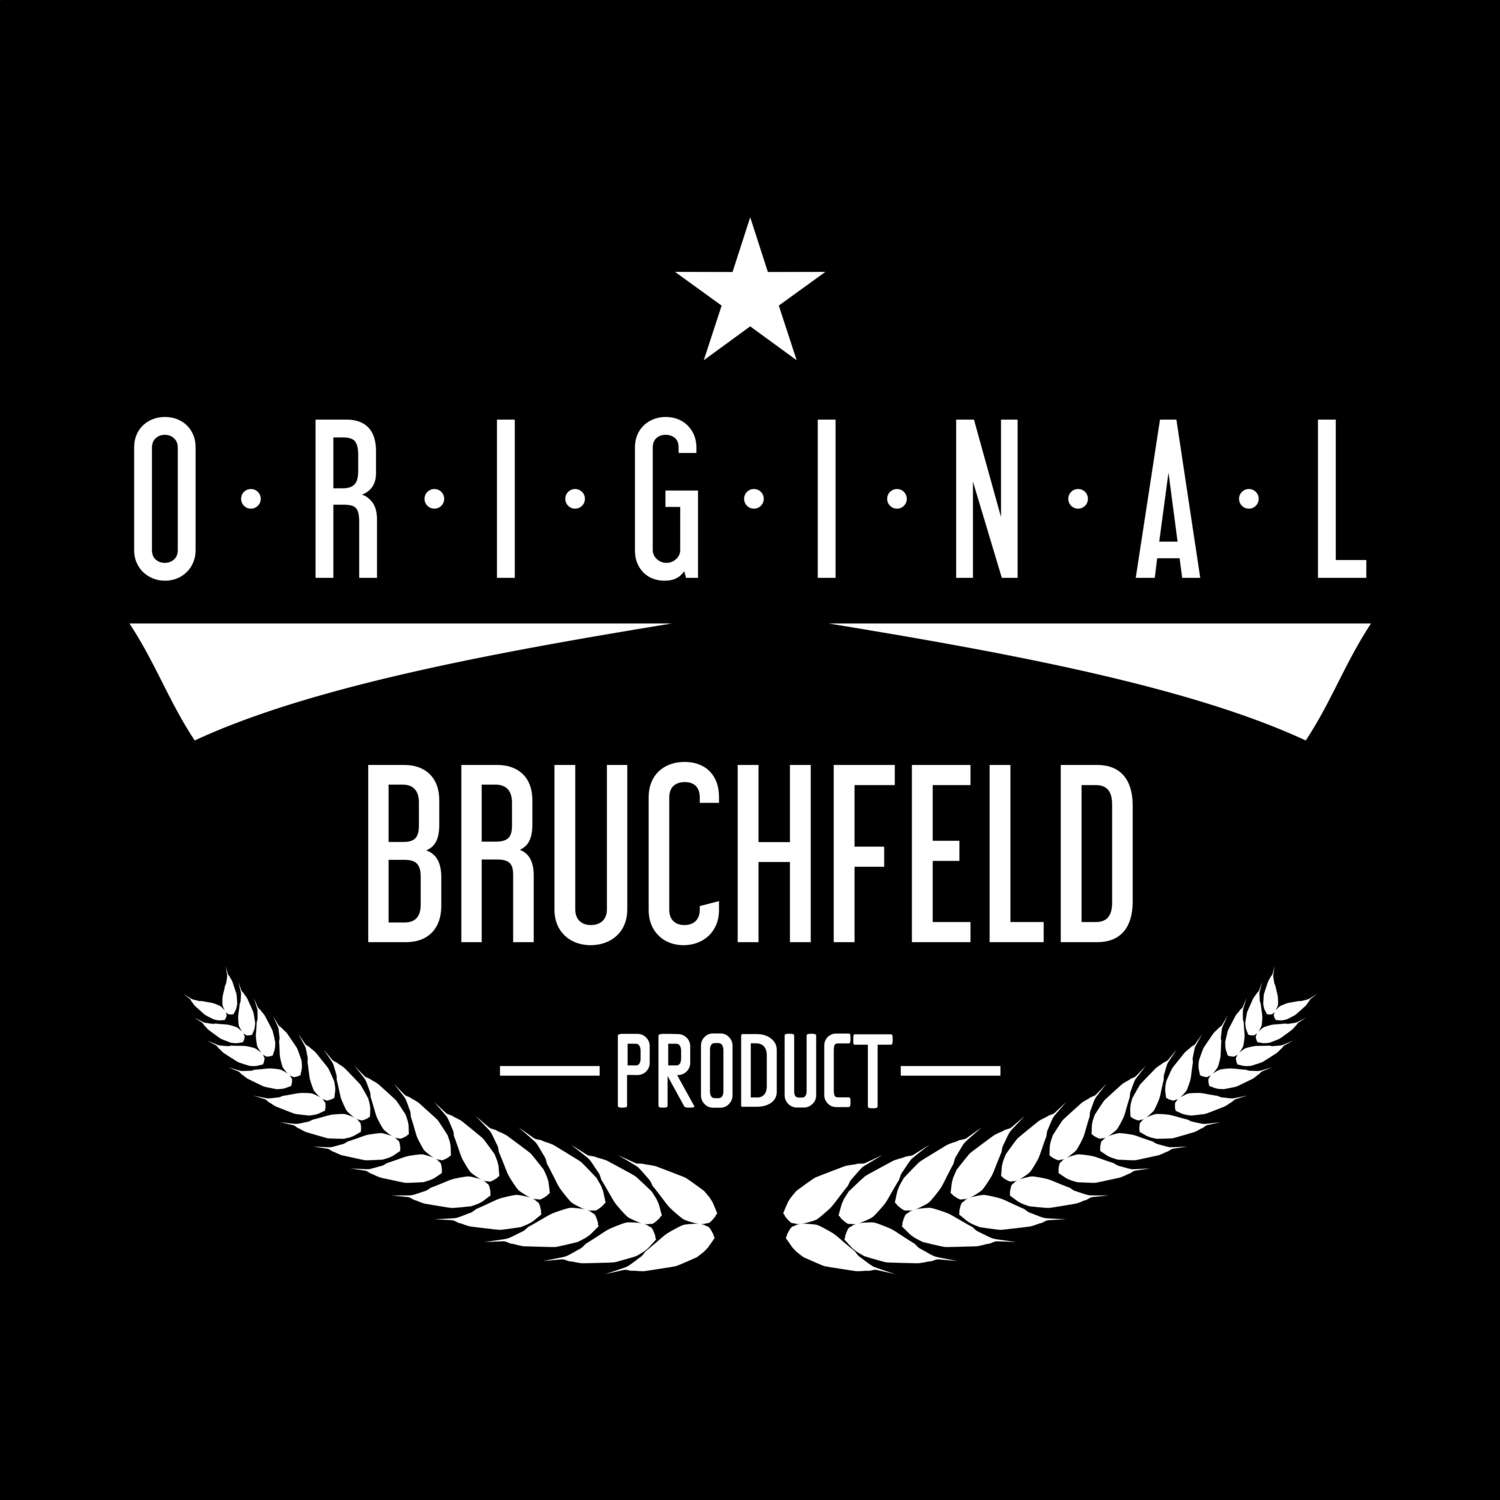 Bruchfeld T-Shirt »Original Product«